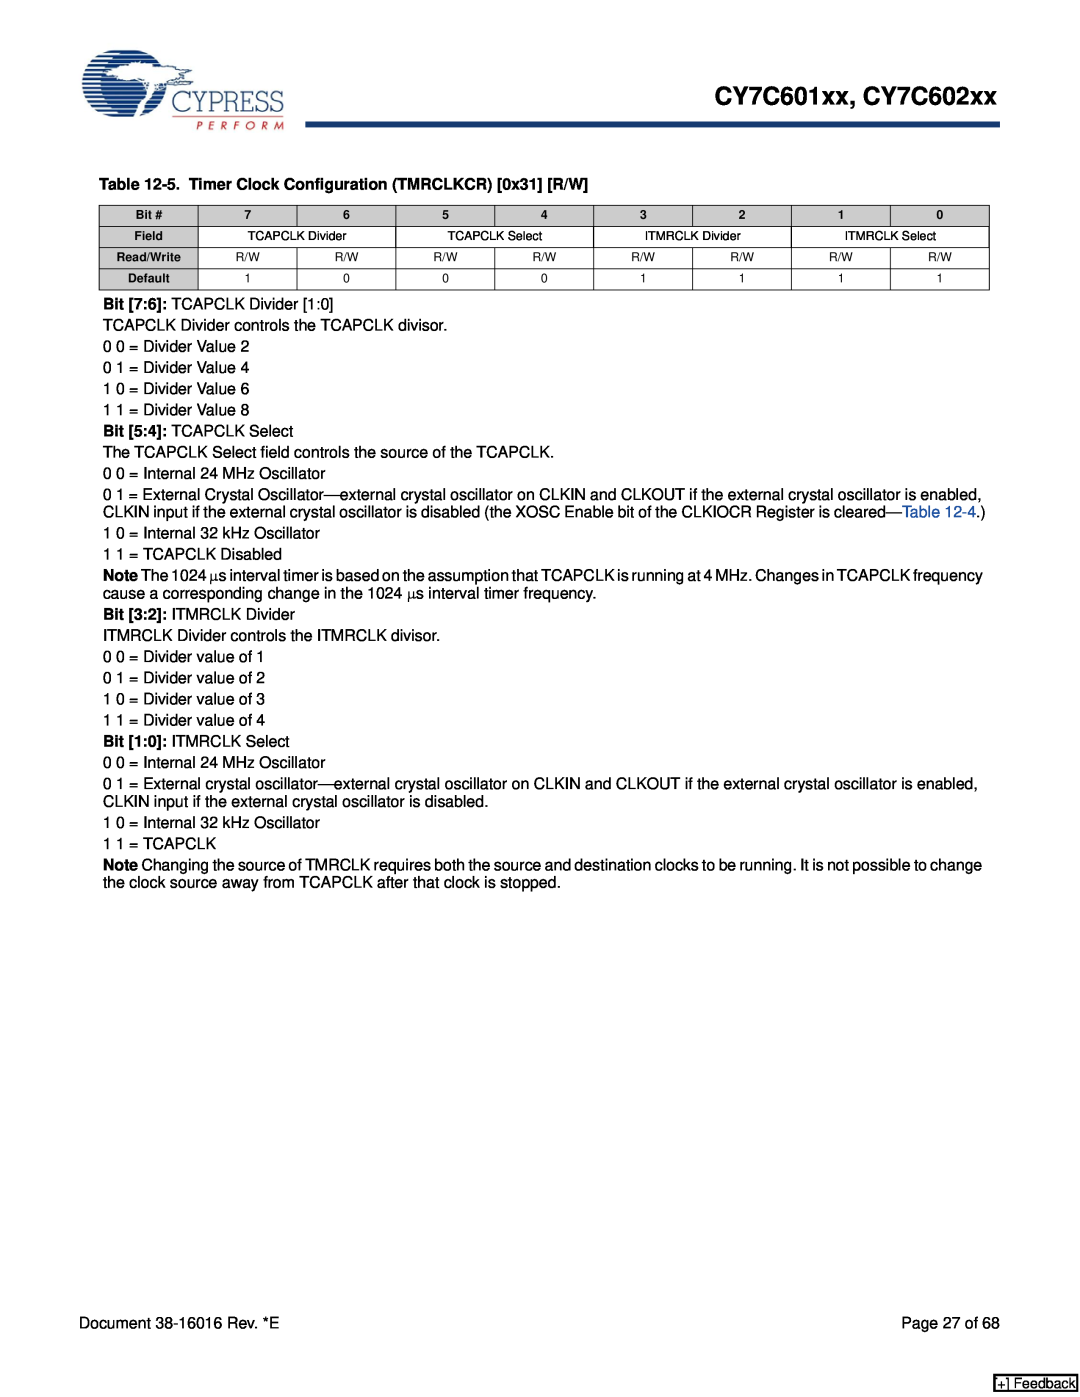 Cypress manual 5. Timer Clock Configuration TMRCLKCR 0x31 R/W, CY7C601xx, CY7C602xx, Page 27 of 